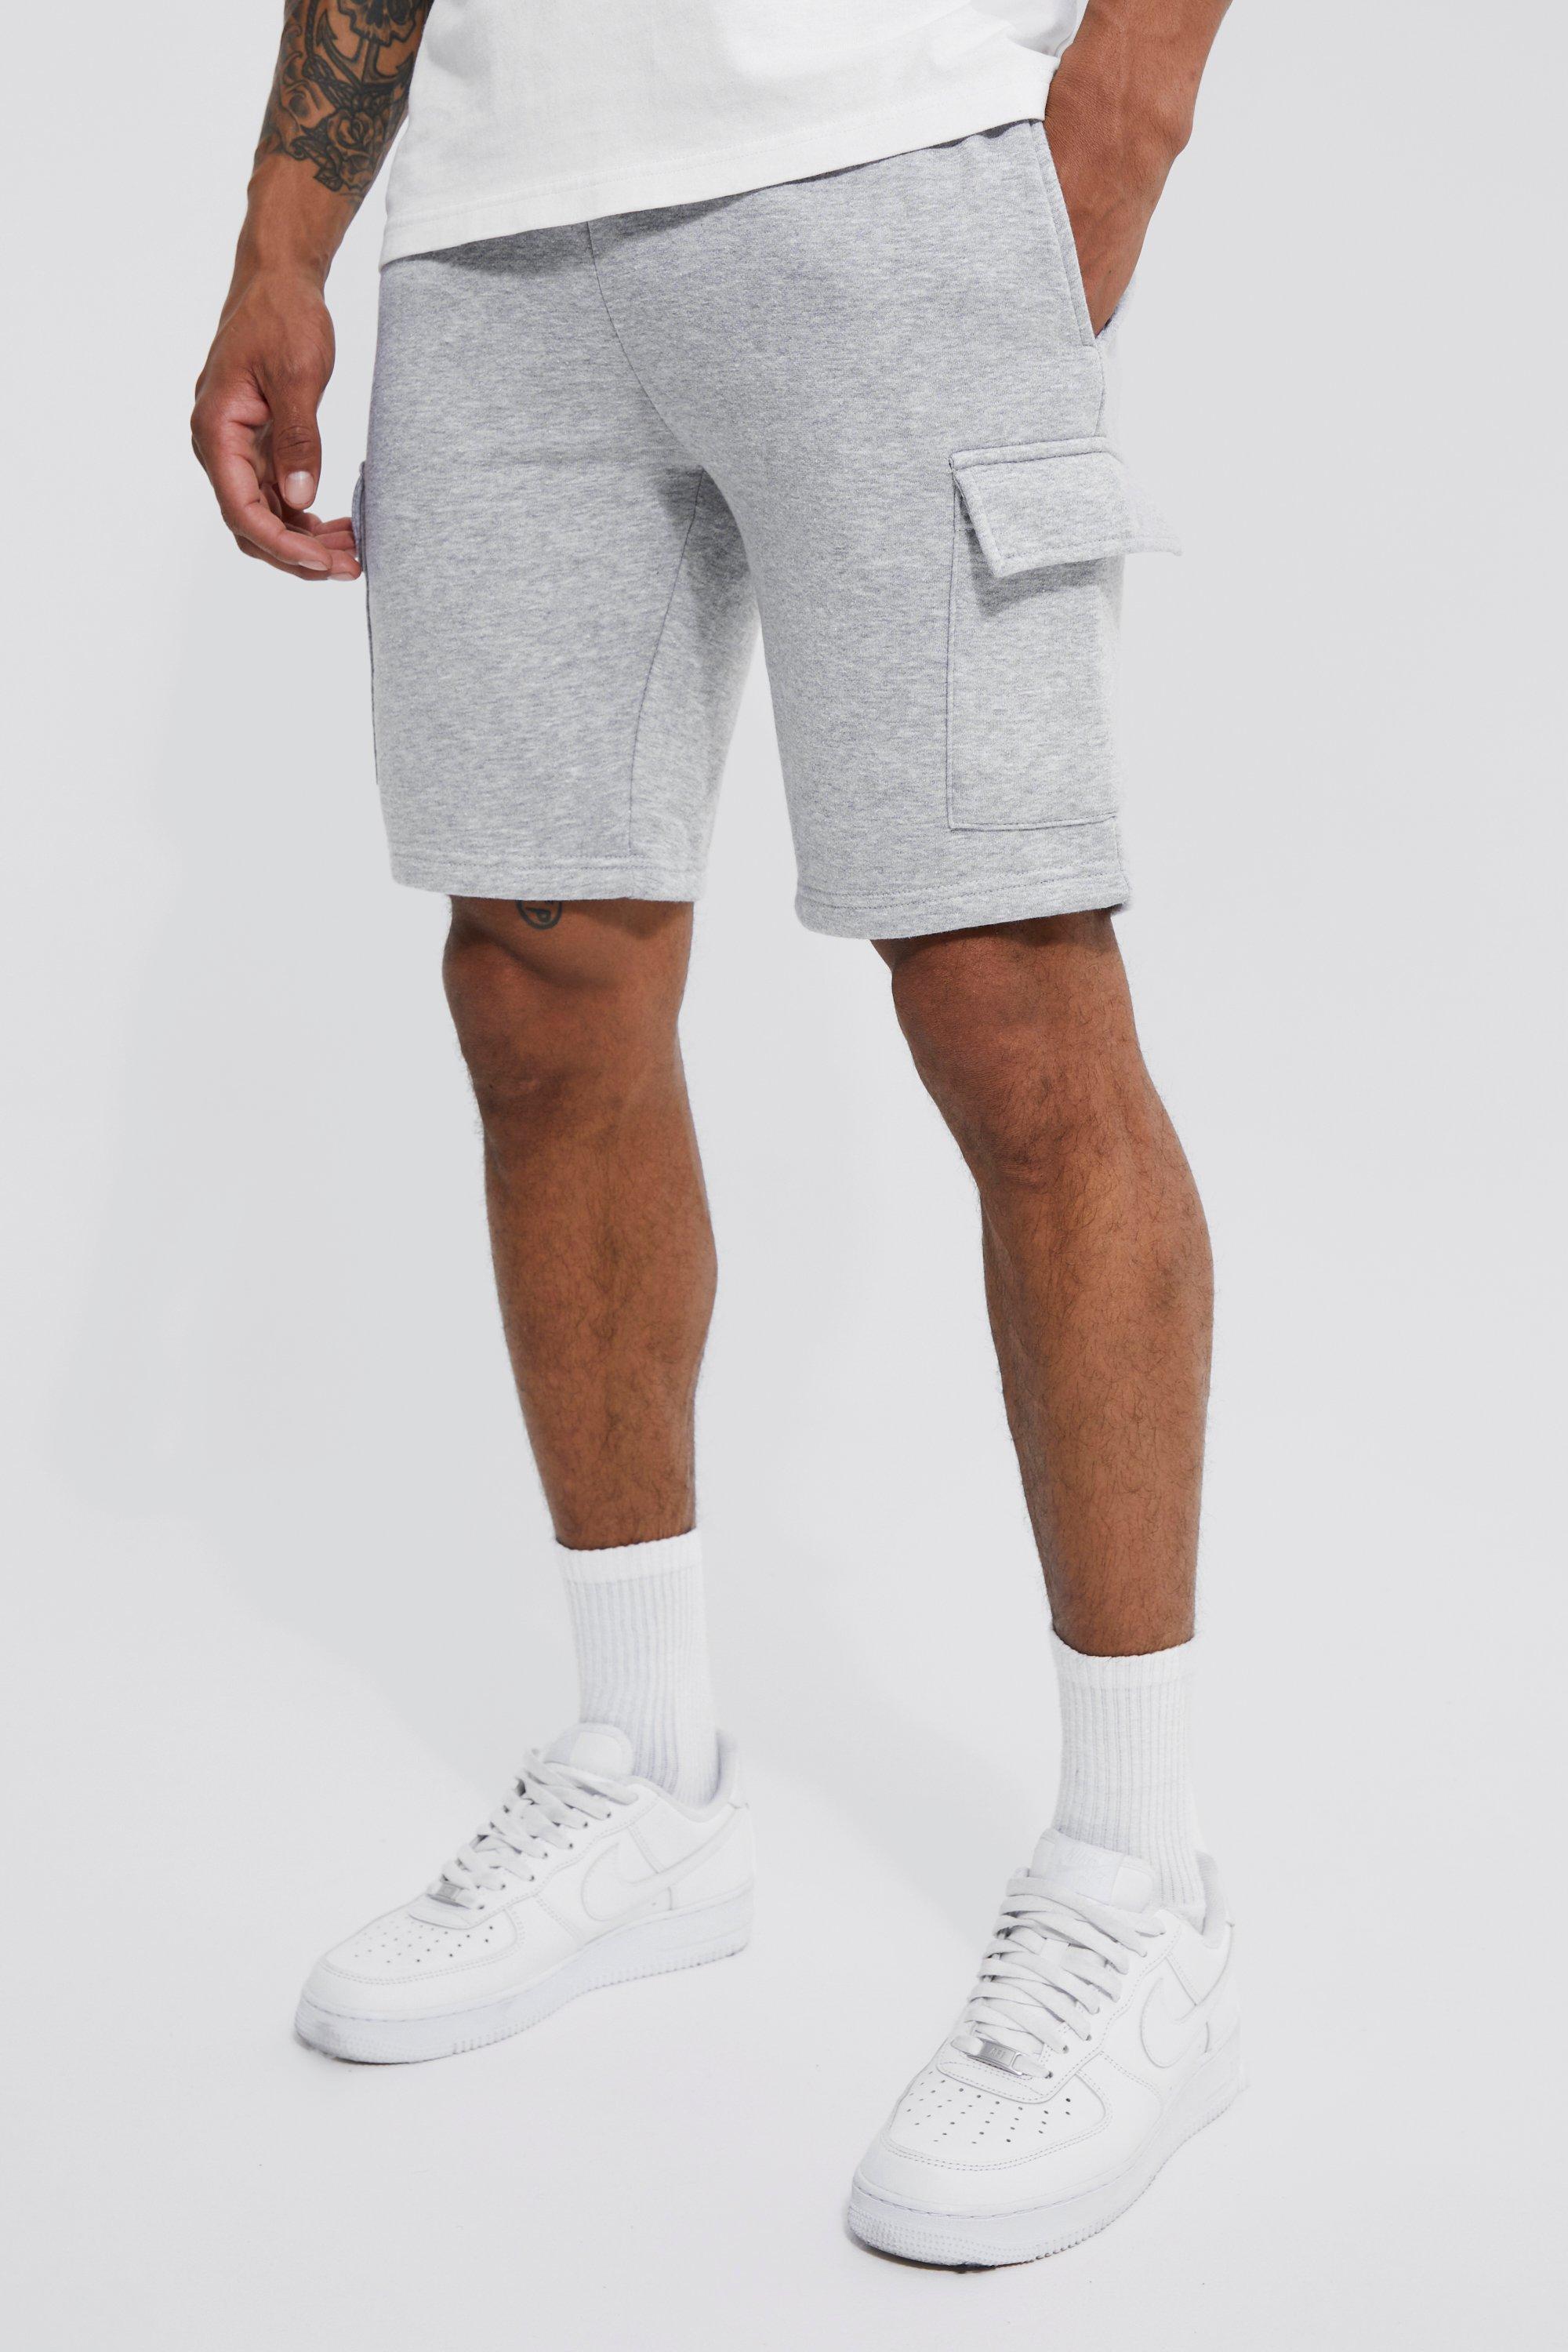 men's basic slim fit mid length jersey cargo short - grey - s, grey